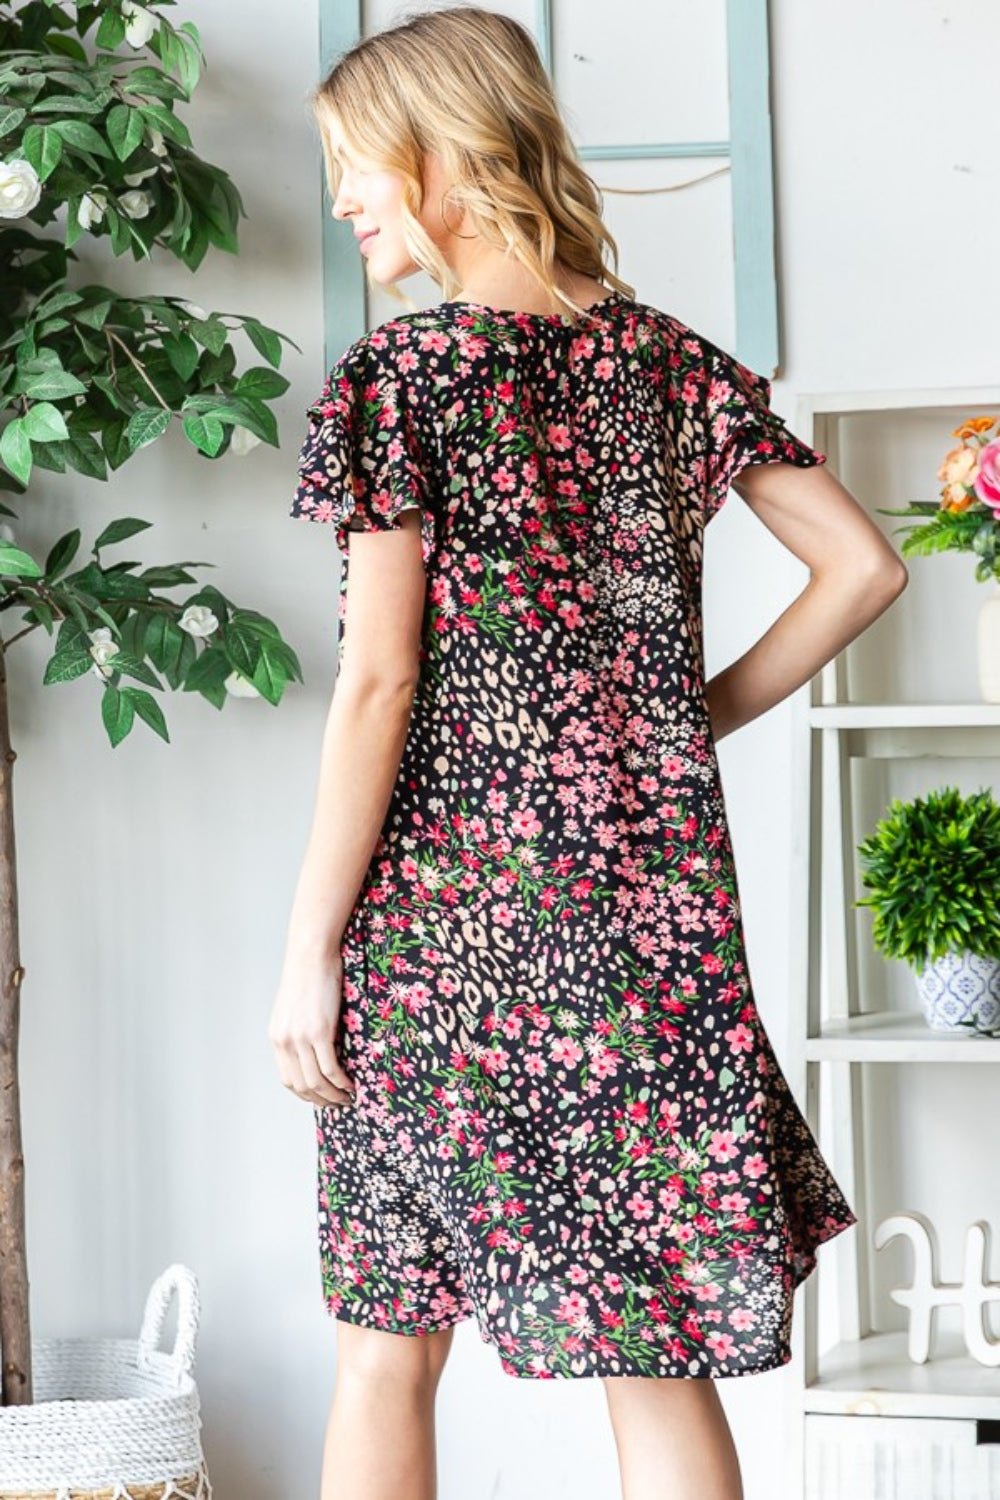 Floral Ruffled Knee-Length Dress with Pockets in BlackKnee-Length DressHeimish